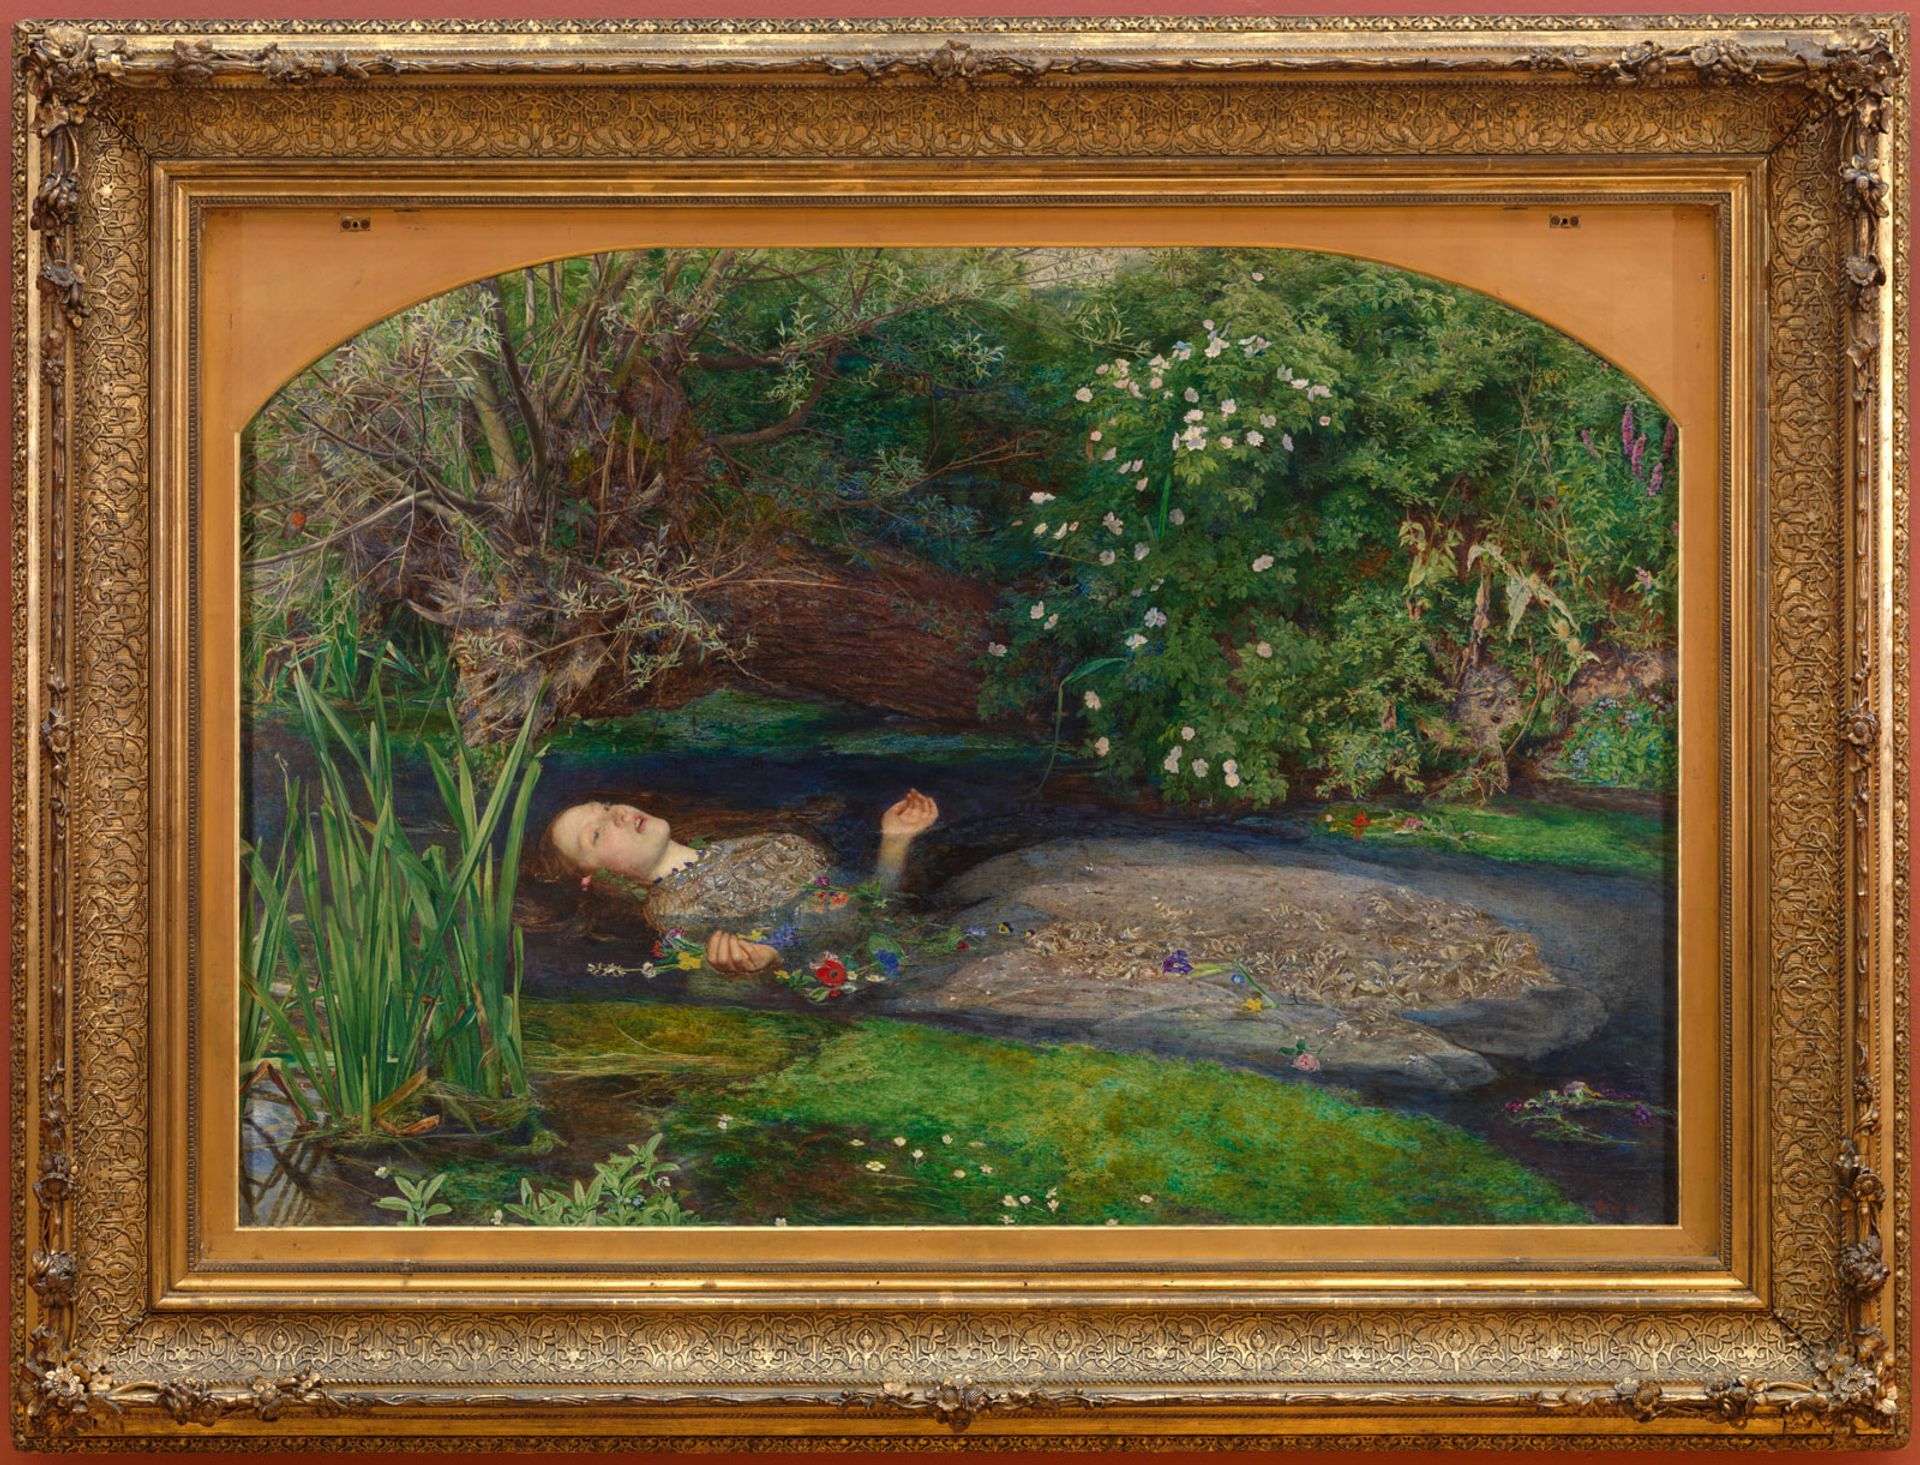 J.E. Millais, Ophelia (1851-52) Tate,  London  2018